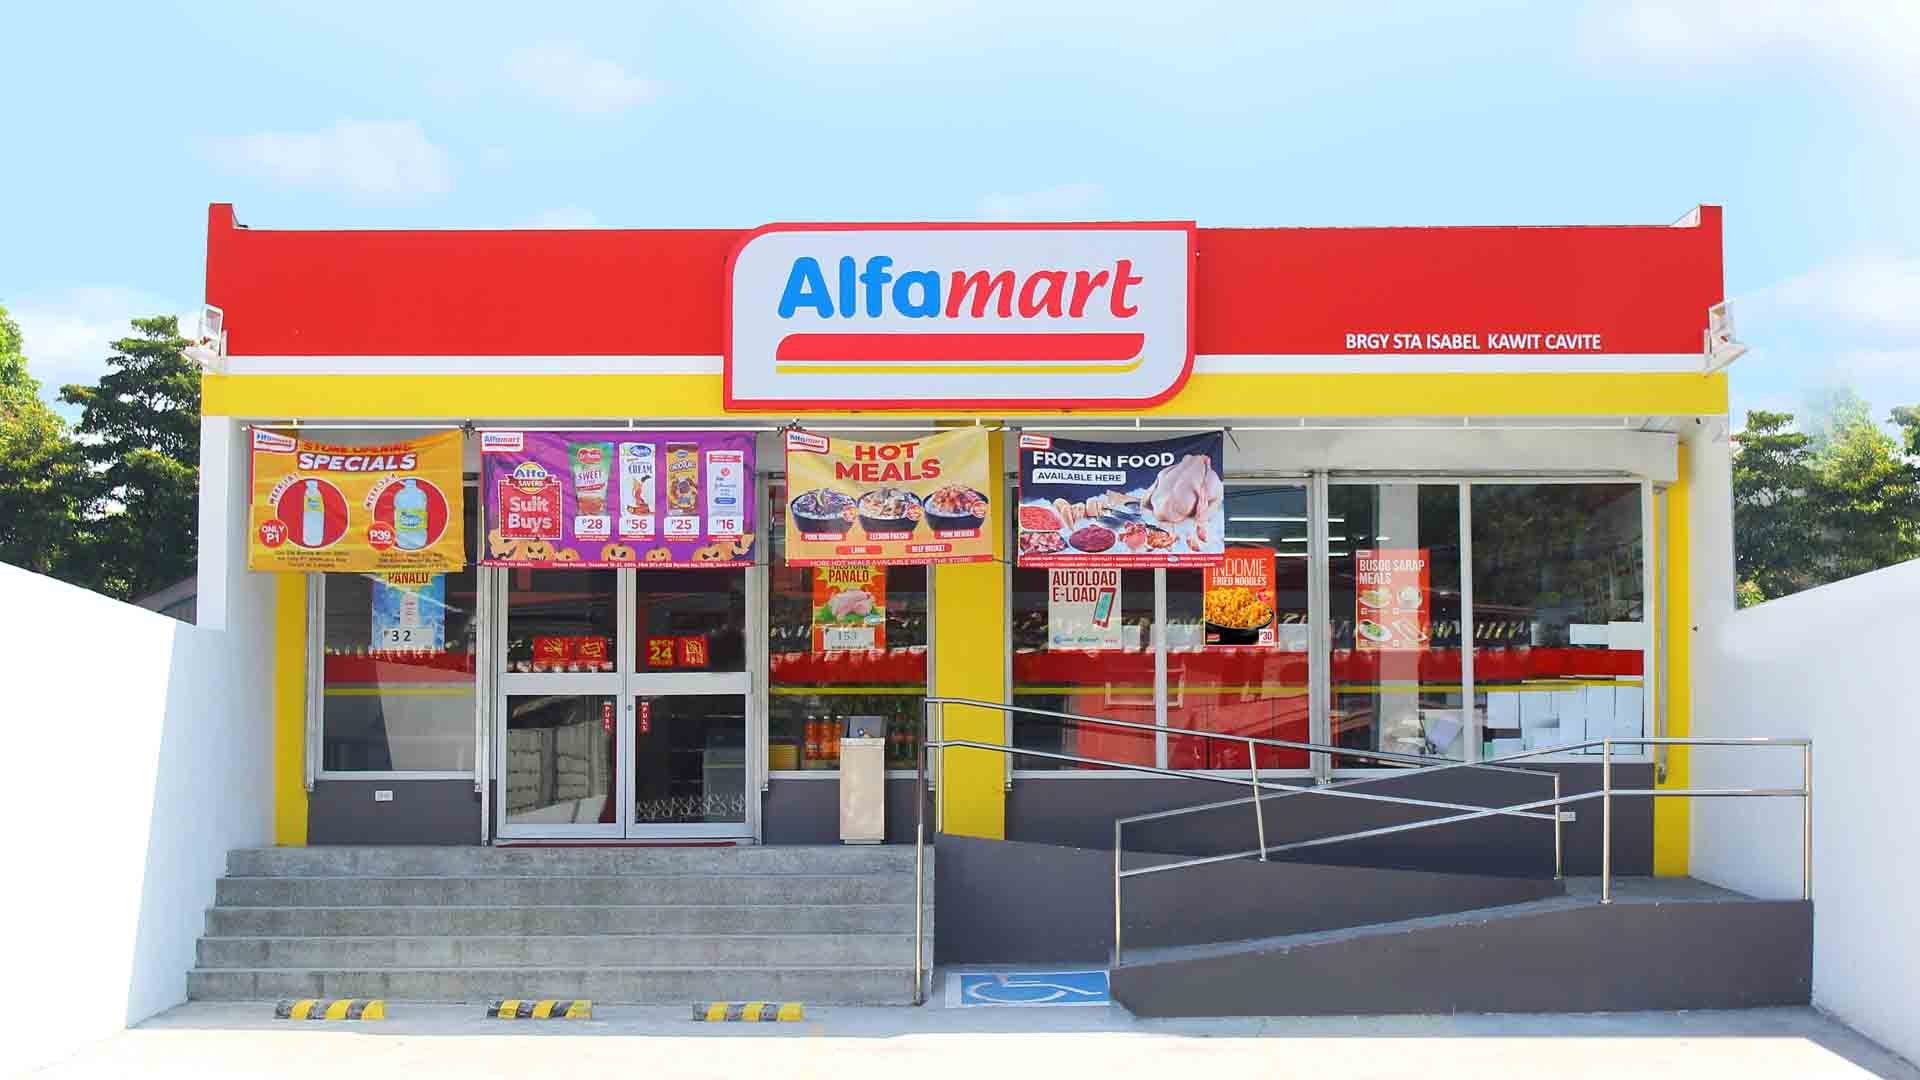 preferred store assignment example in alfamart